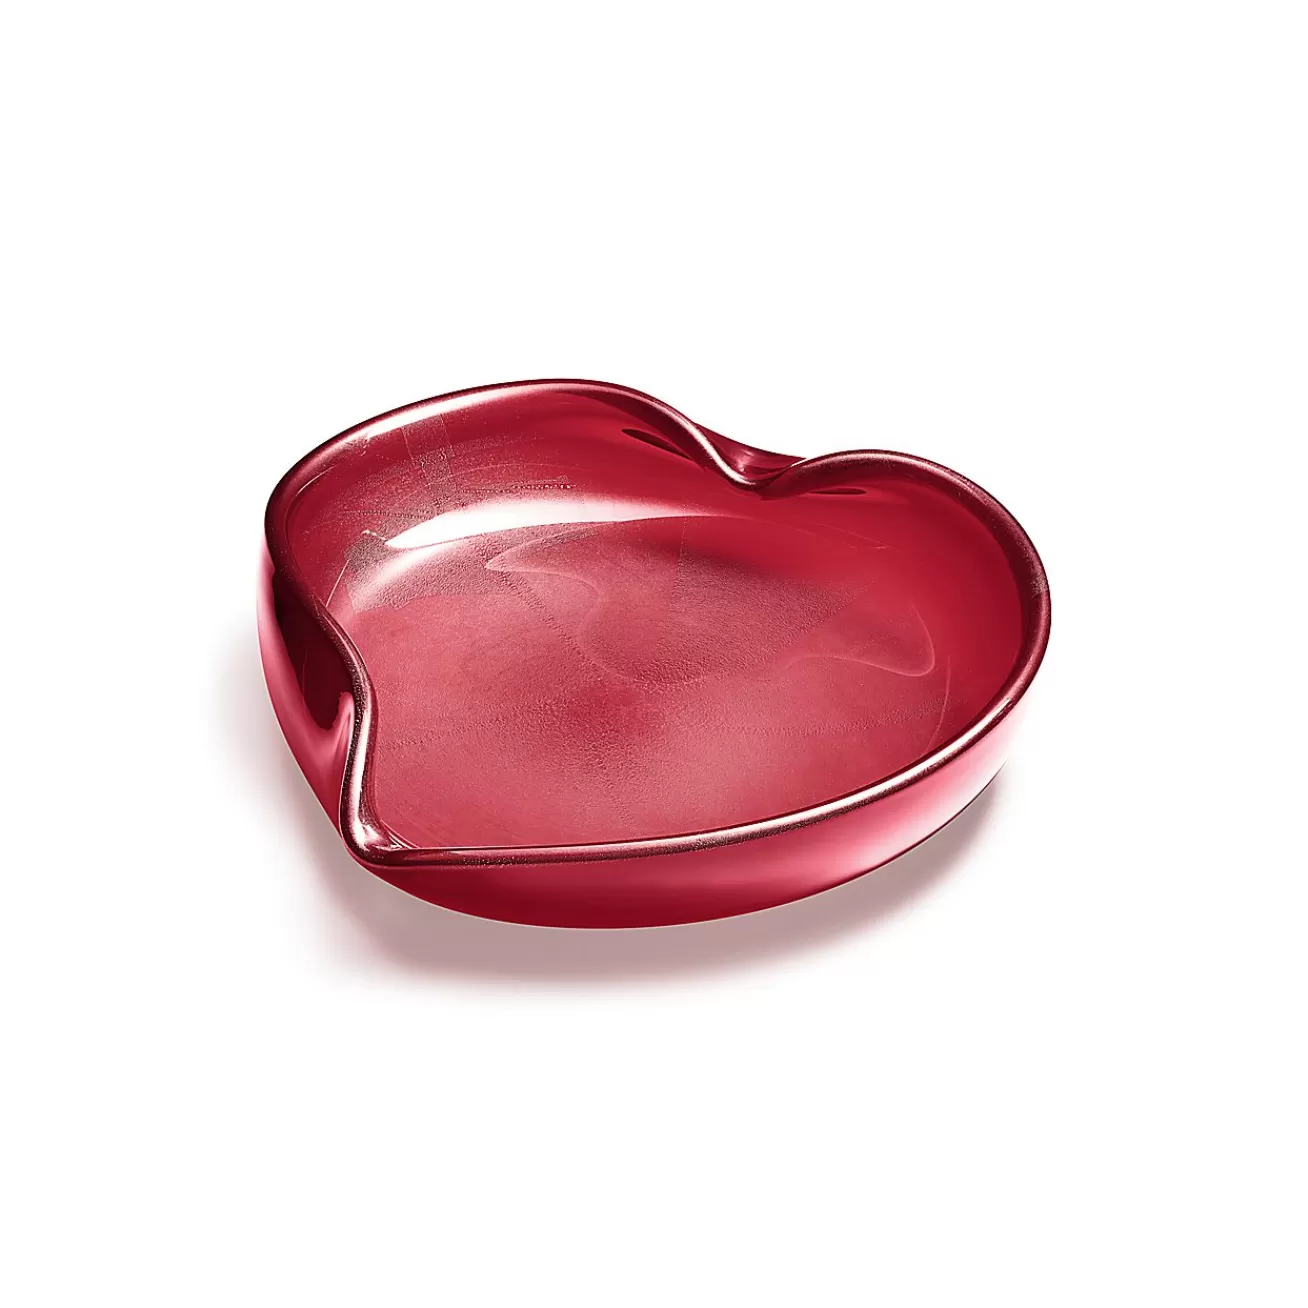 Tiffany & Co. Elsa Peretti® Heart dish in red and gold-colored crystal glass. | ^ Decor | Elsa Peretti Home